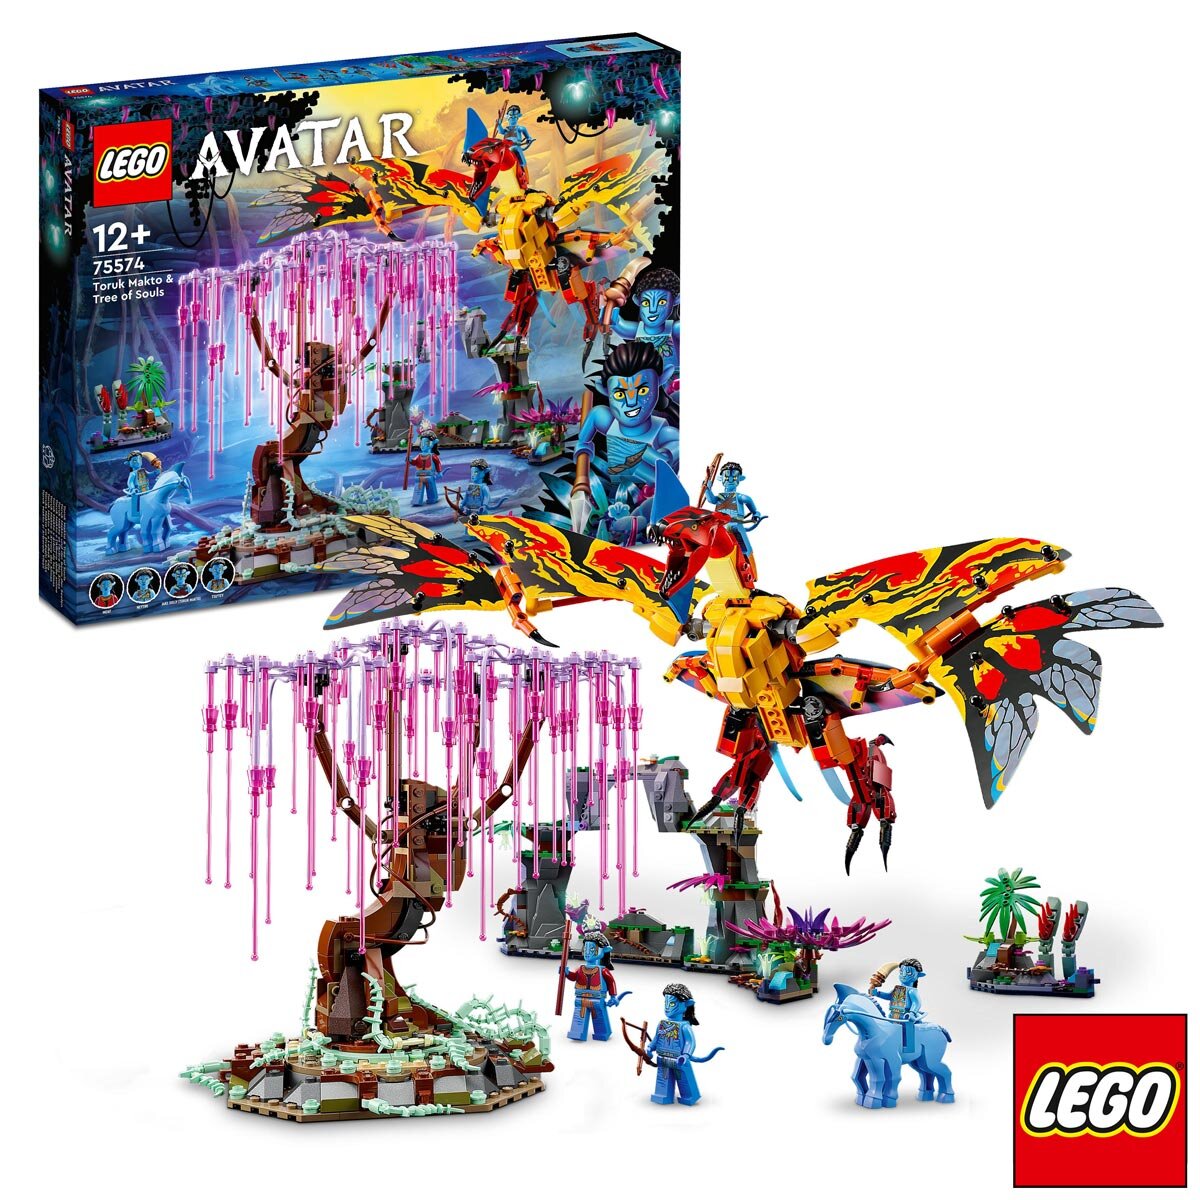 LEGO Avatar Toruk Makto & Tree of Souls - Model 75574 (12